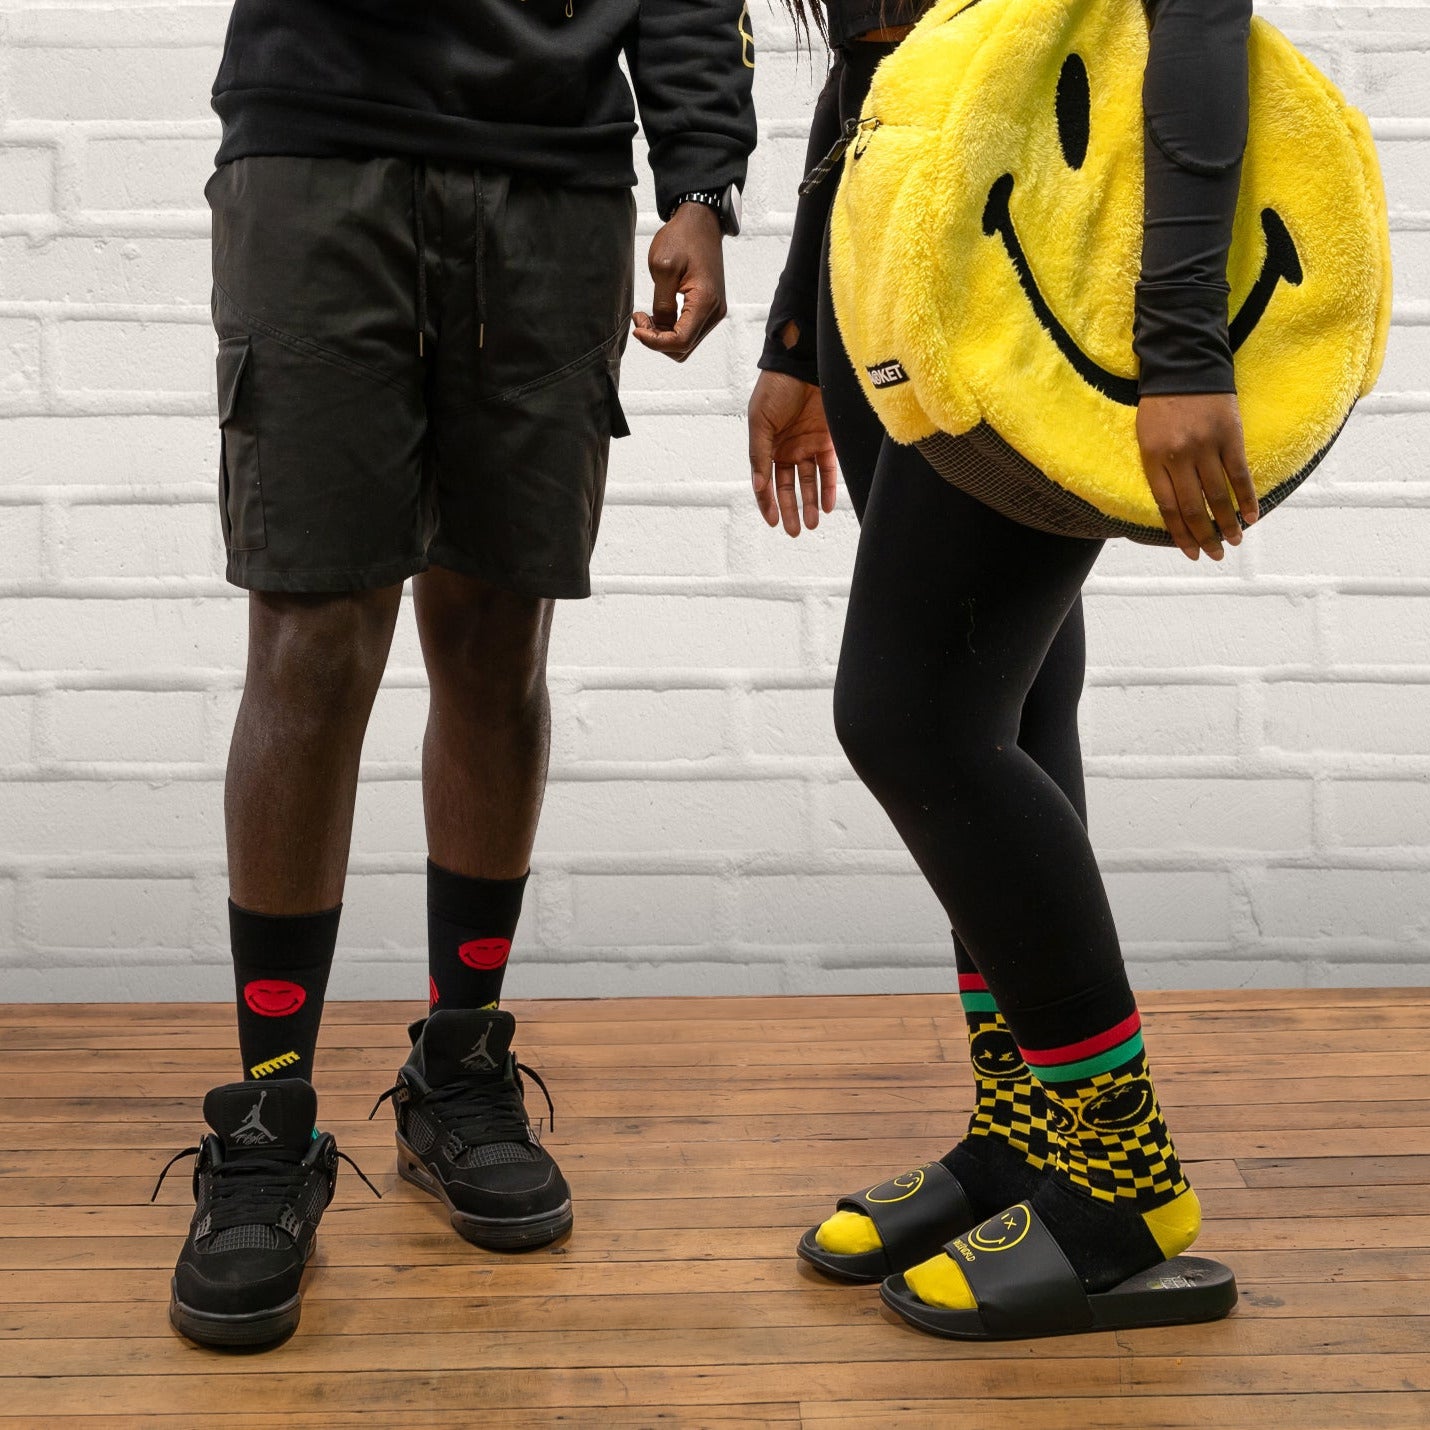 Smiley Kente socks by Afropop Socks